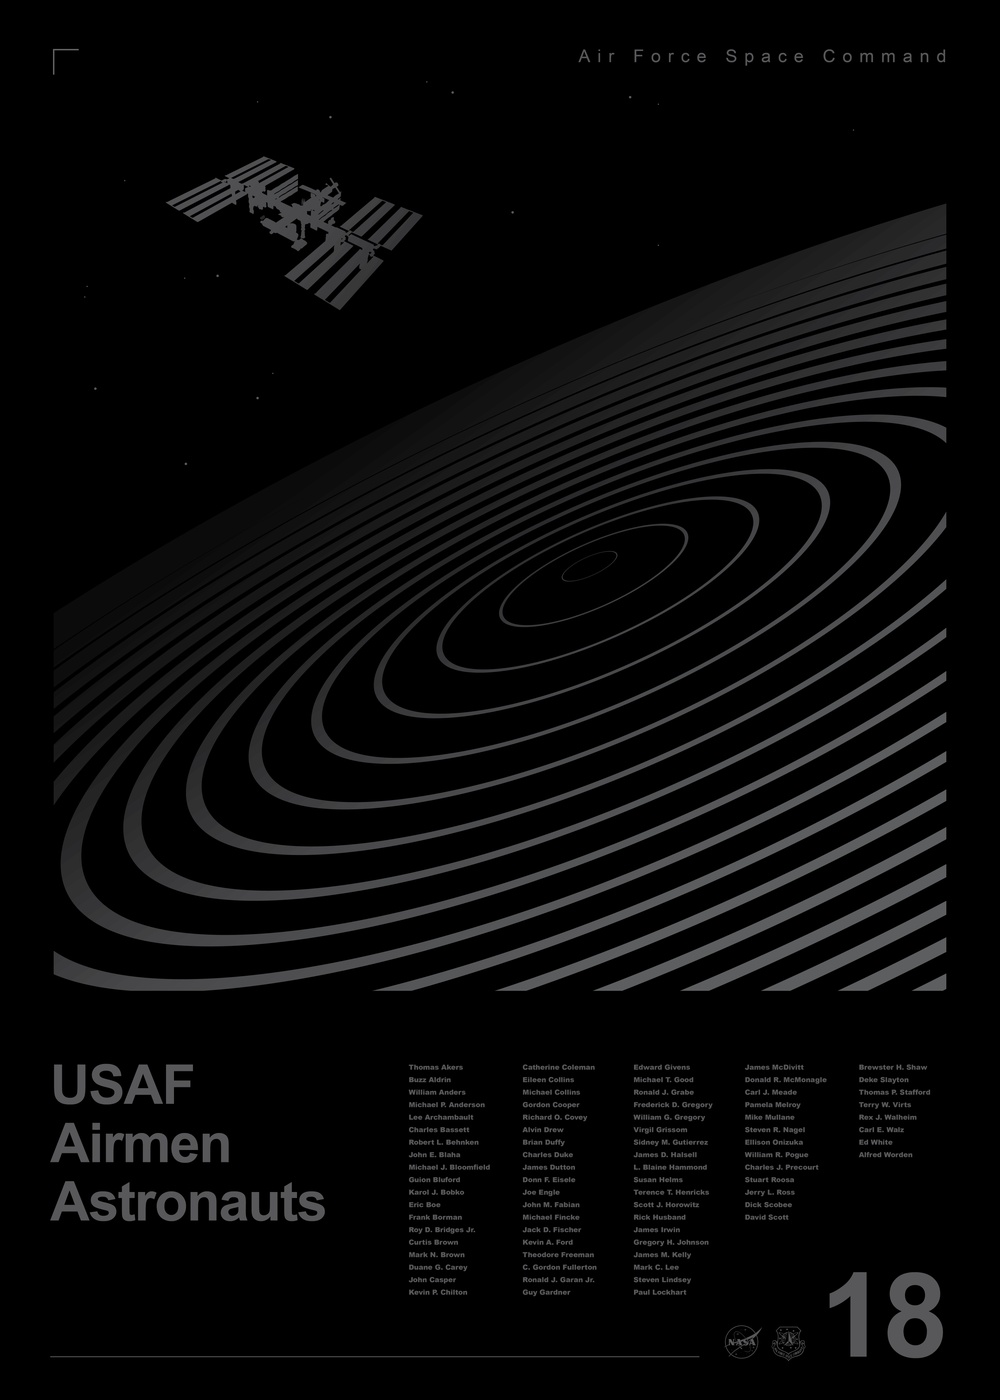 USAF Airmen Astronauts Poster - 300 DPI